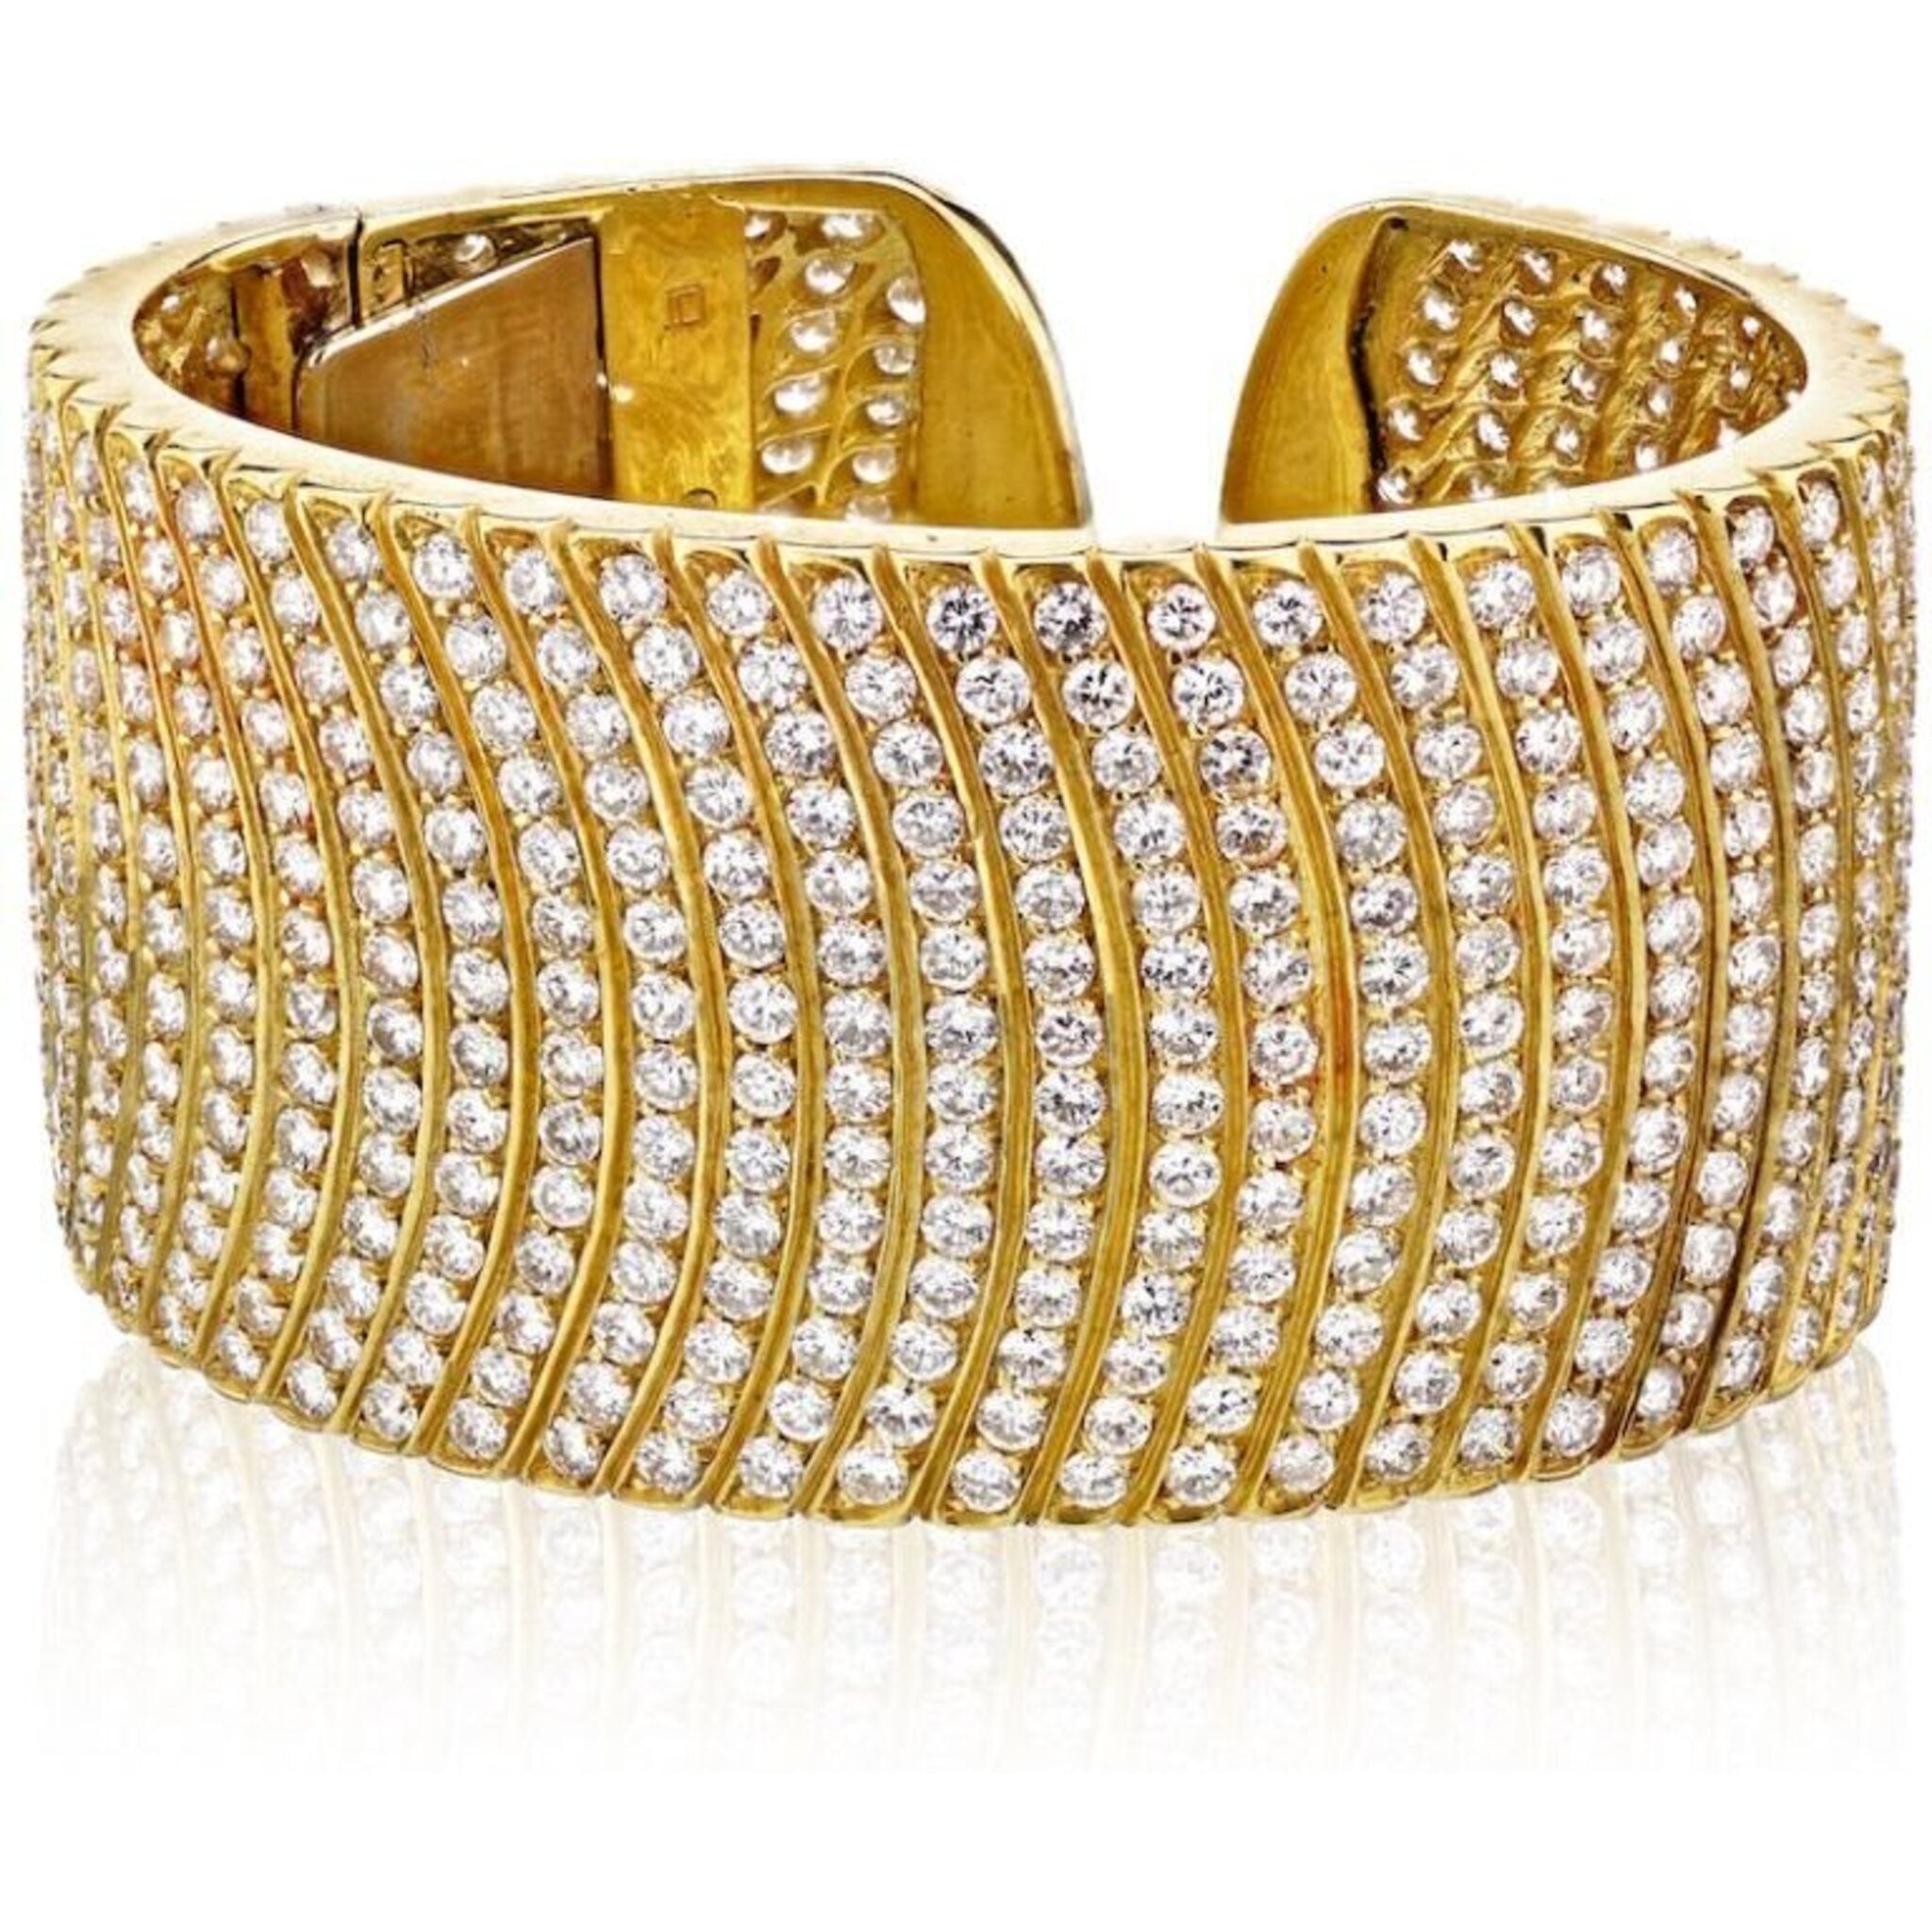 18K Yellow Gold 32 Carats Exceptional Diamond Cuff Bracelet